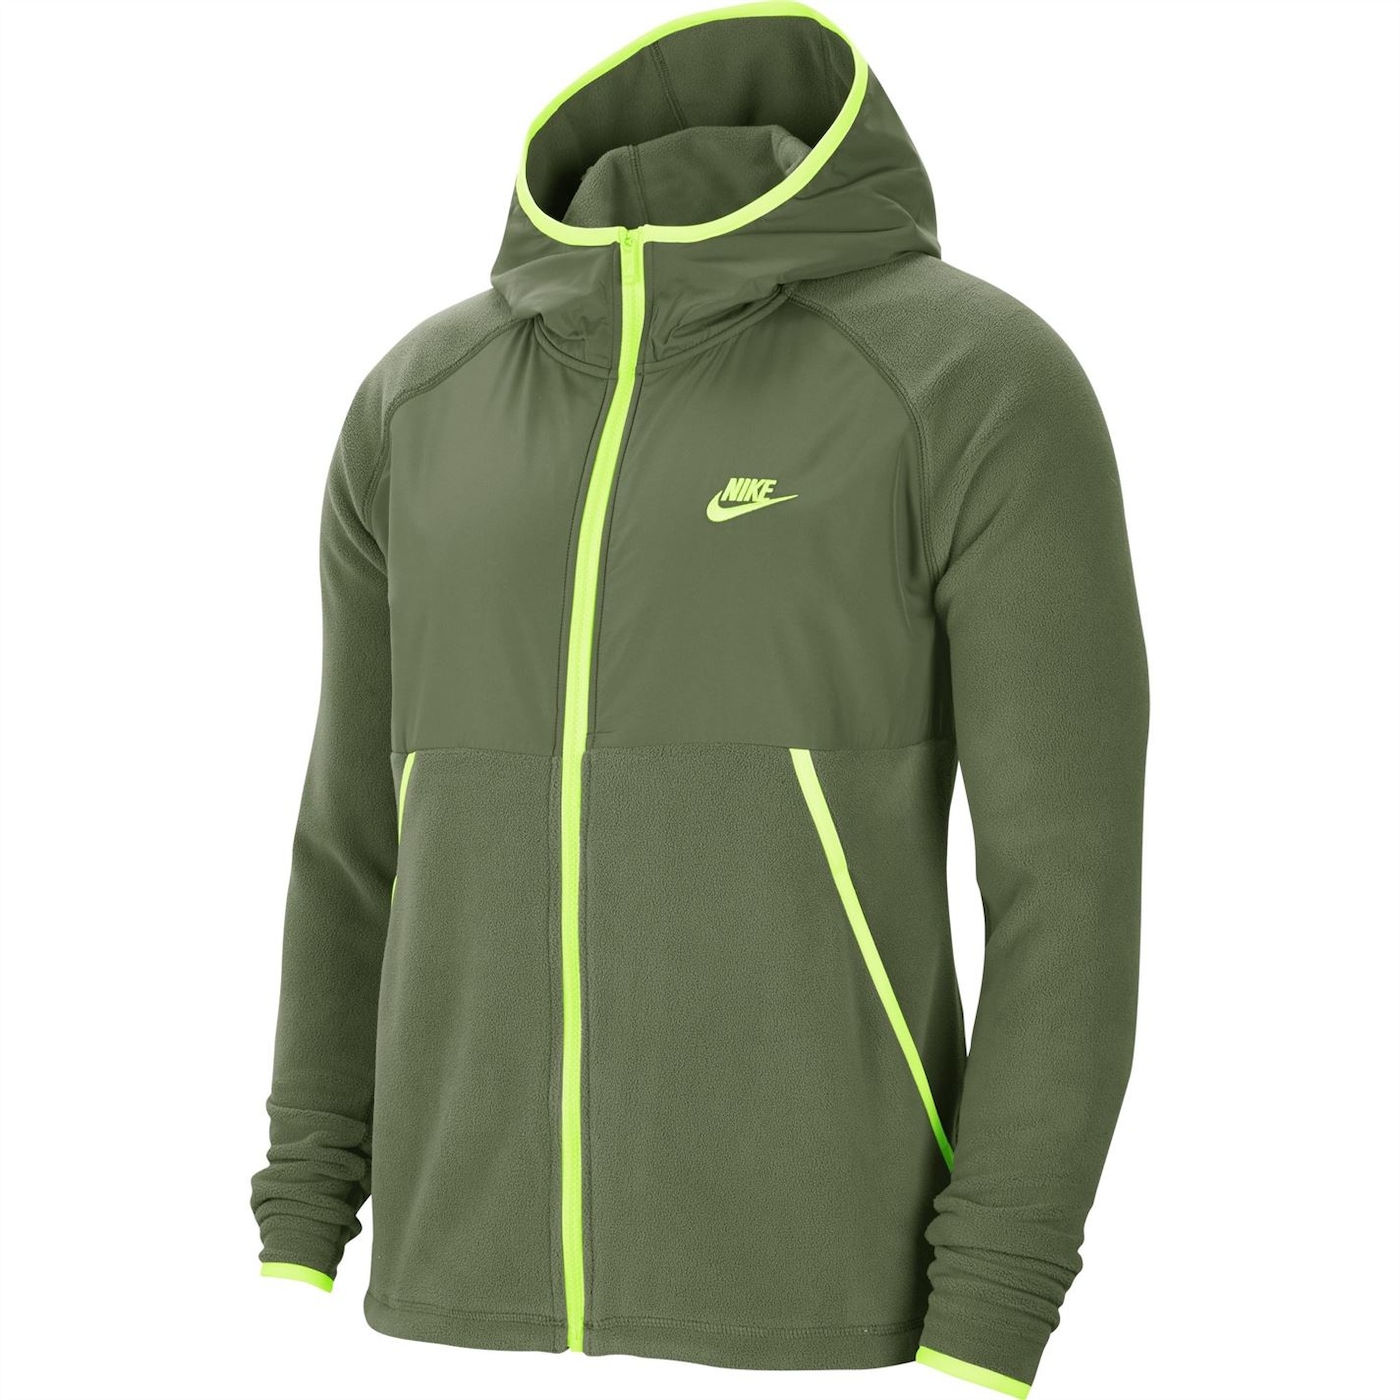 Жени  Дамско облекло  Якета & Палта  Зимни якета Nike Winter Zip Hoodie Mens 1402621-7608417